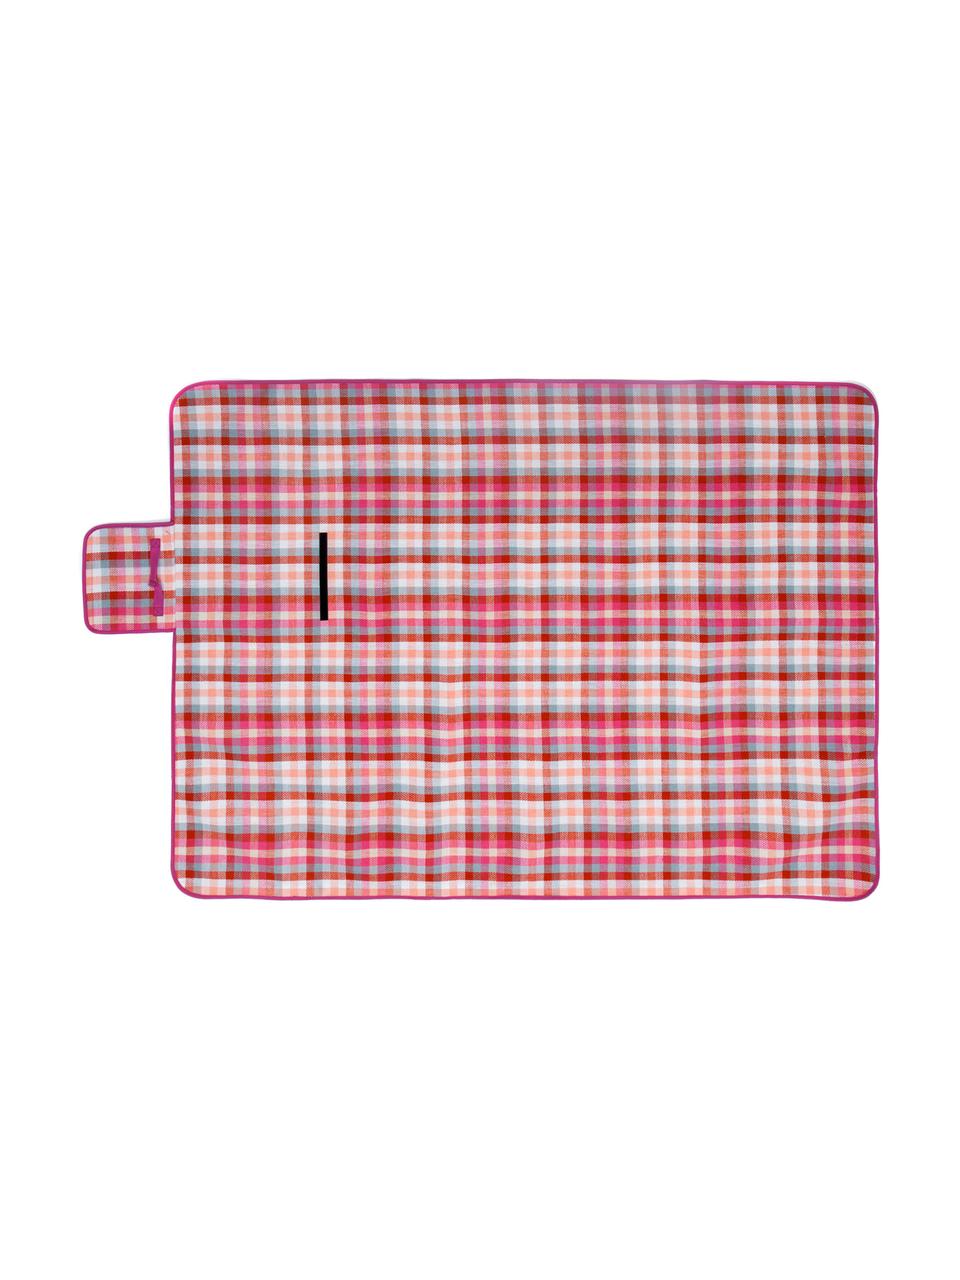 Manta de picnic Clear, Parte superior: fibra sintética, Parte trasera: plástico, Rojo, blanco, rosa, menta, melocotón, An 130 x L 170 cm